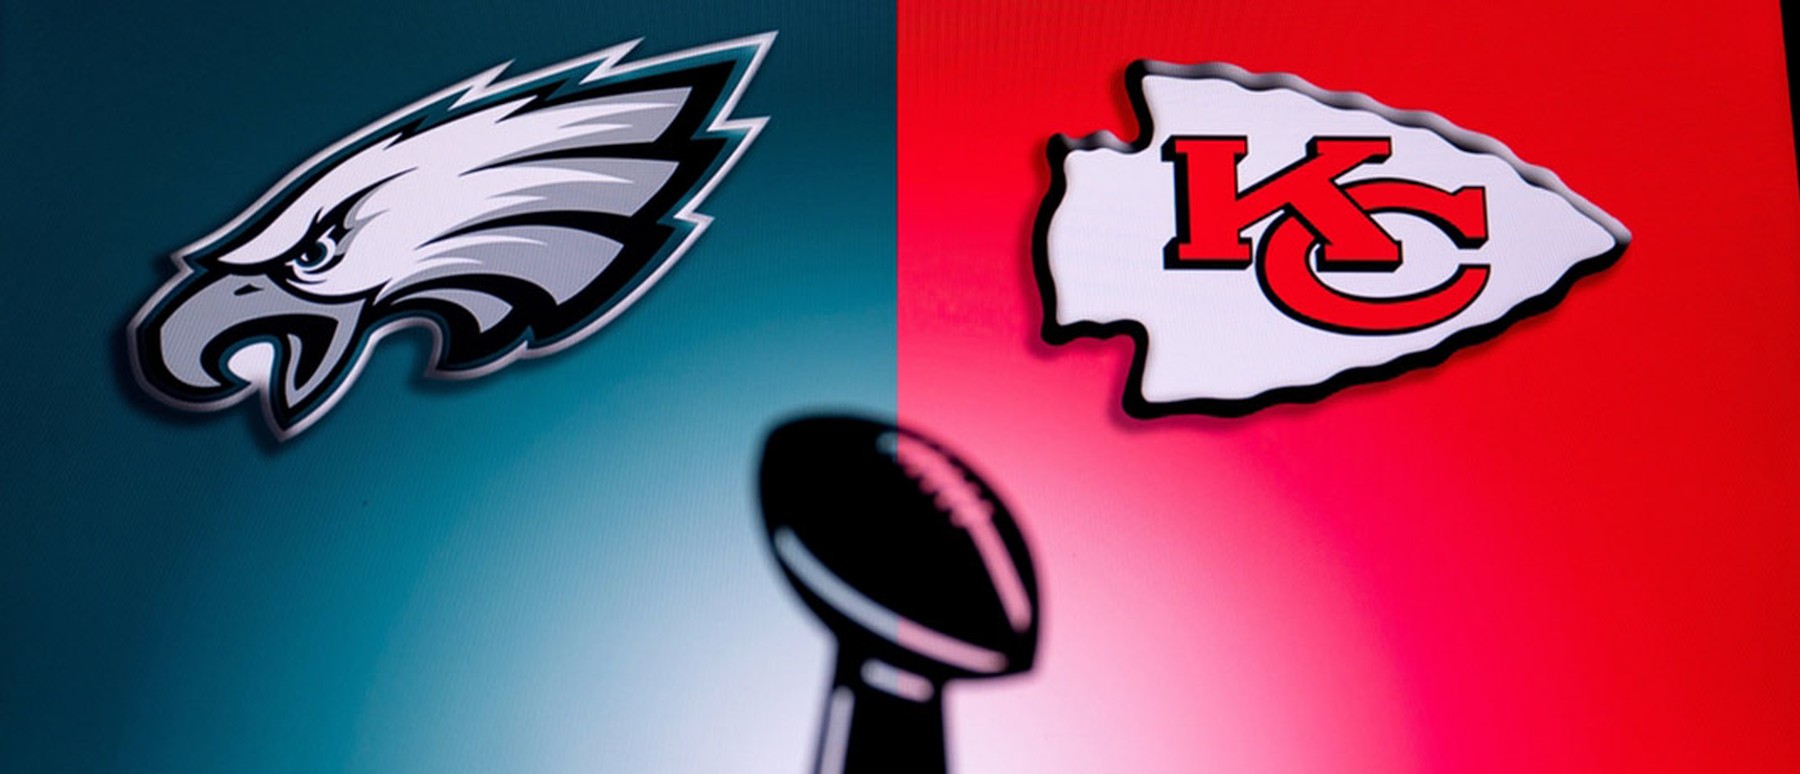 Philadelphia Eagles and Kansas City Chiefs logos